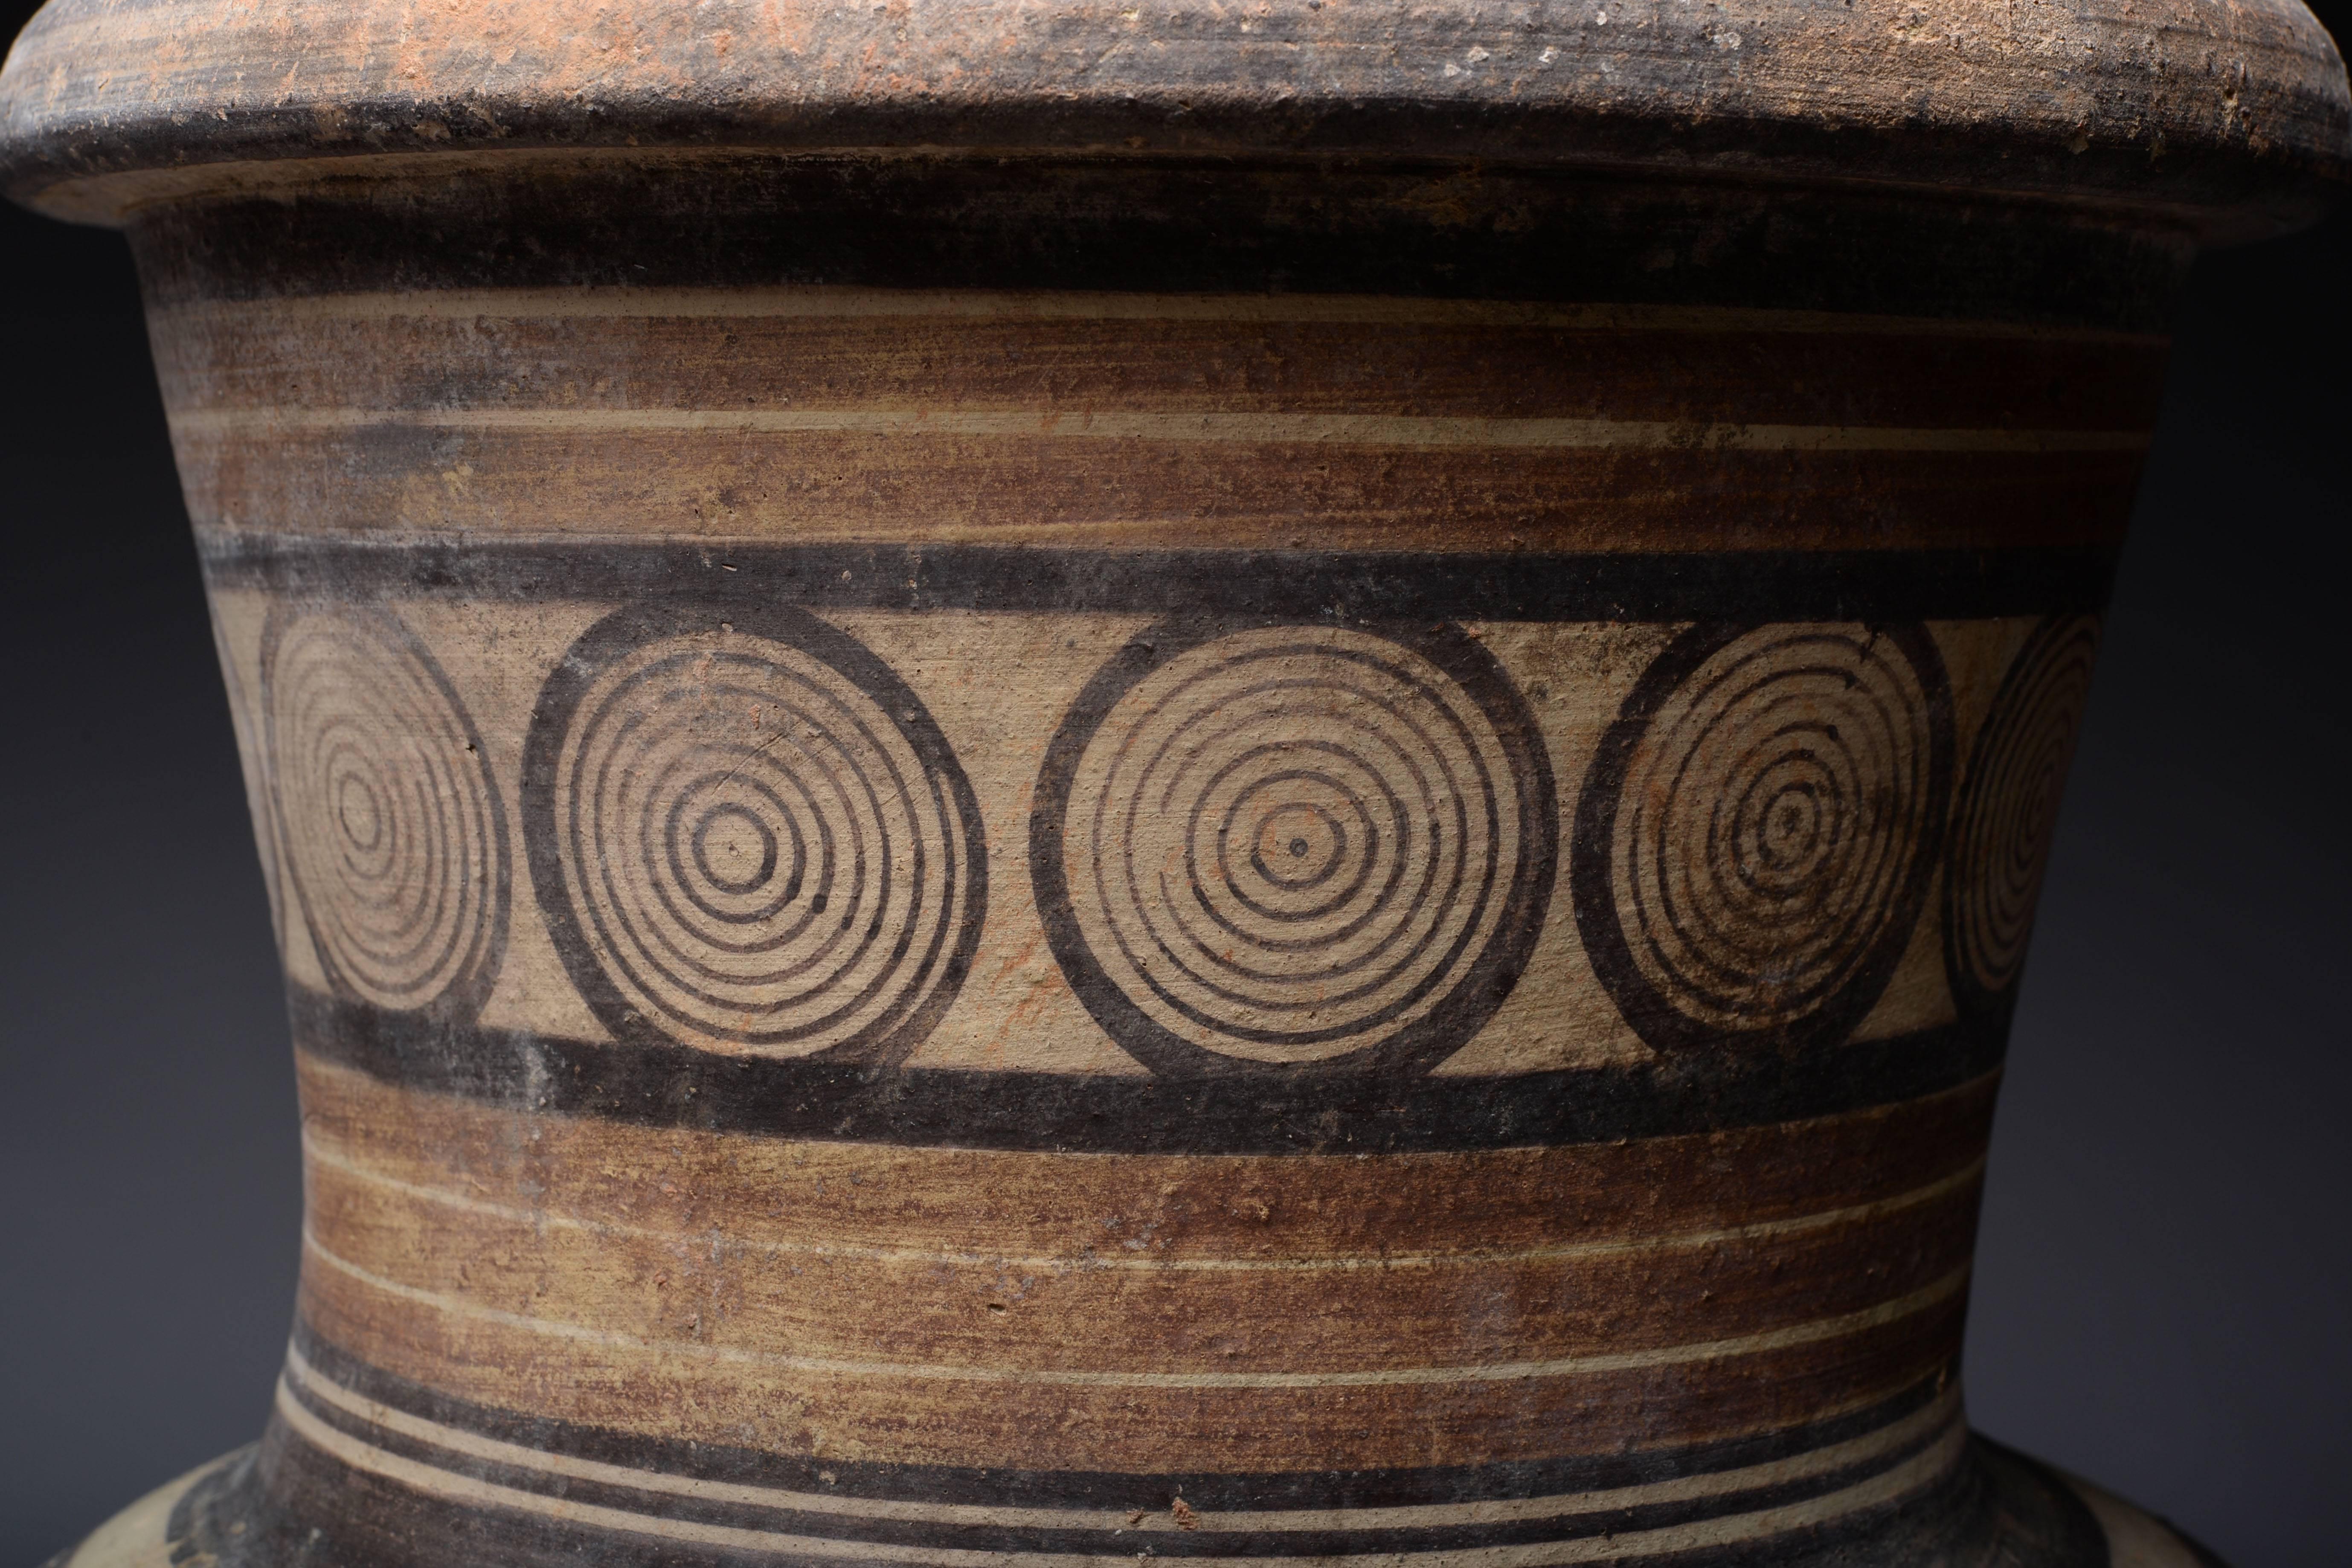 Huge Ancient Cypriot Geometric Period Amphora - 950 BC 1